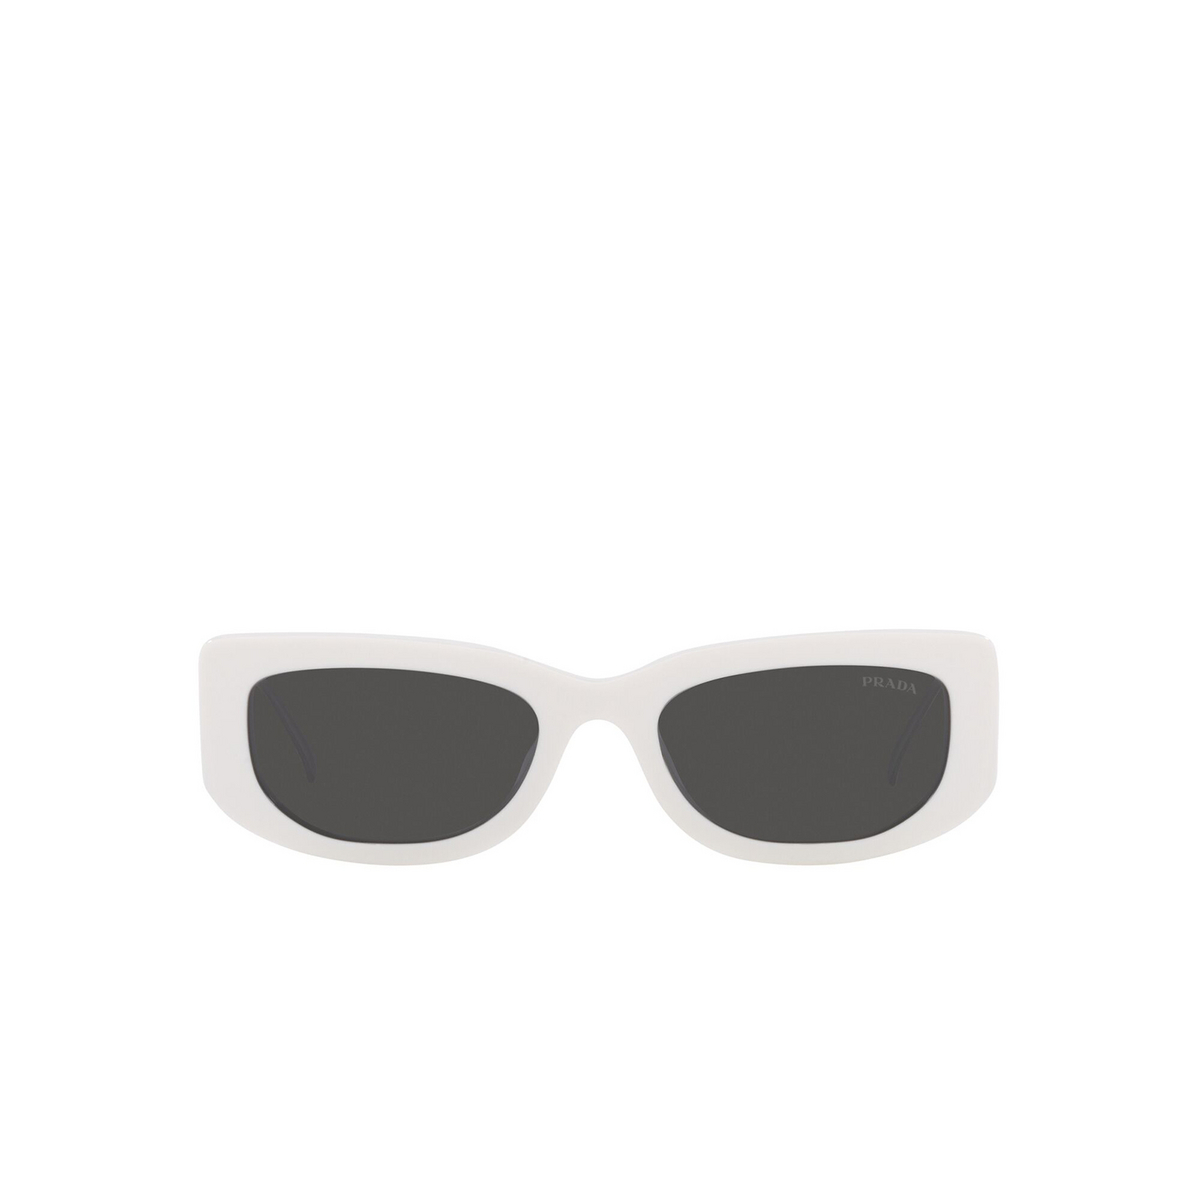 Prada® Rectangle Sunglasses: PR 14YS color Talc 1425S0 - front view.